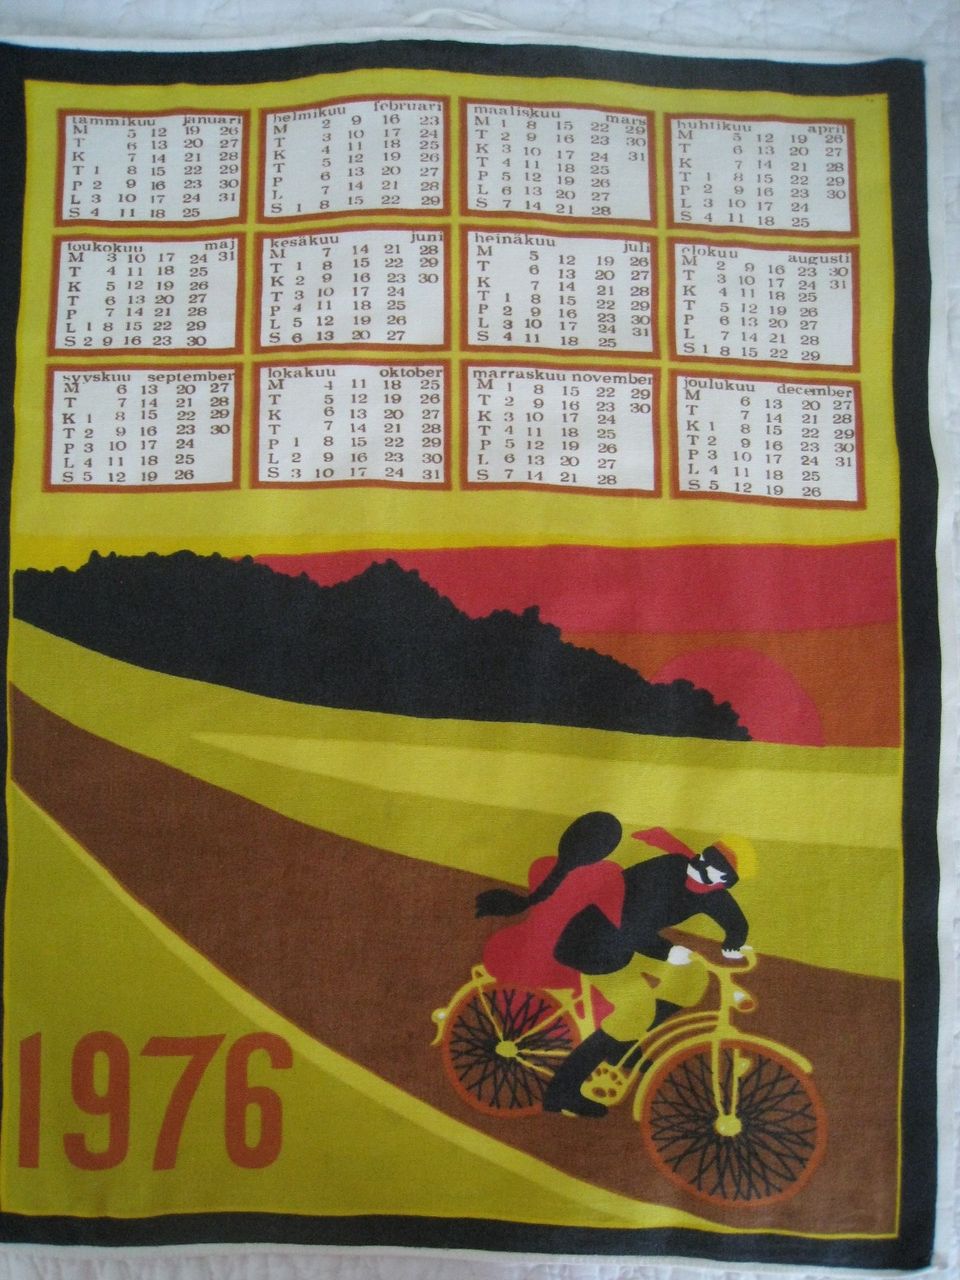 Kalenteripyyhe 1976 Vintage